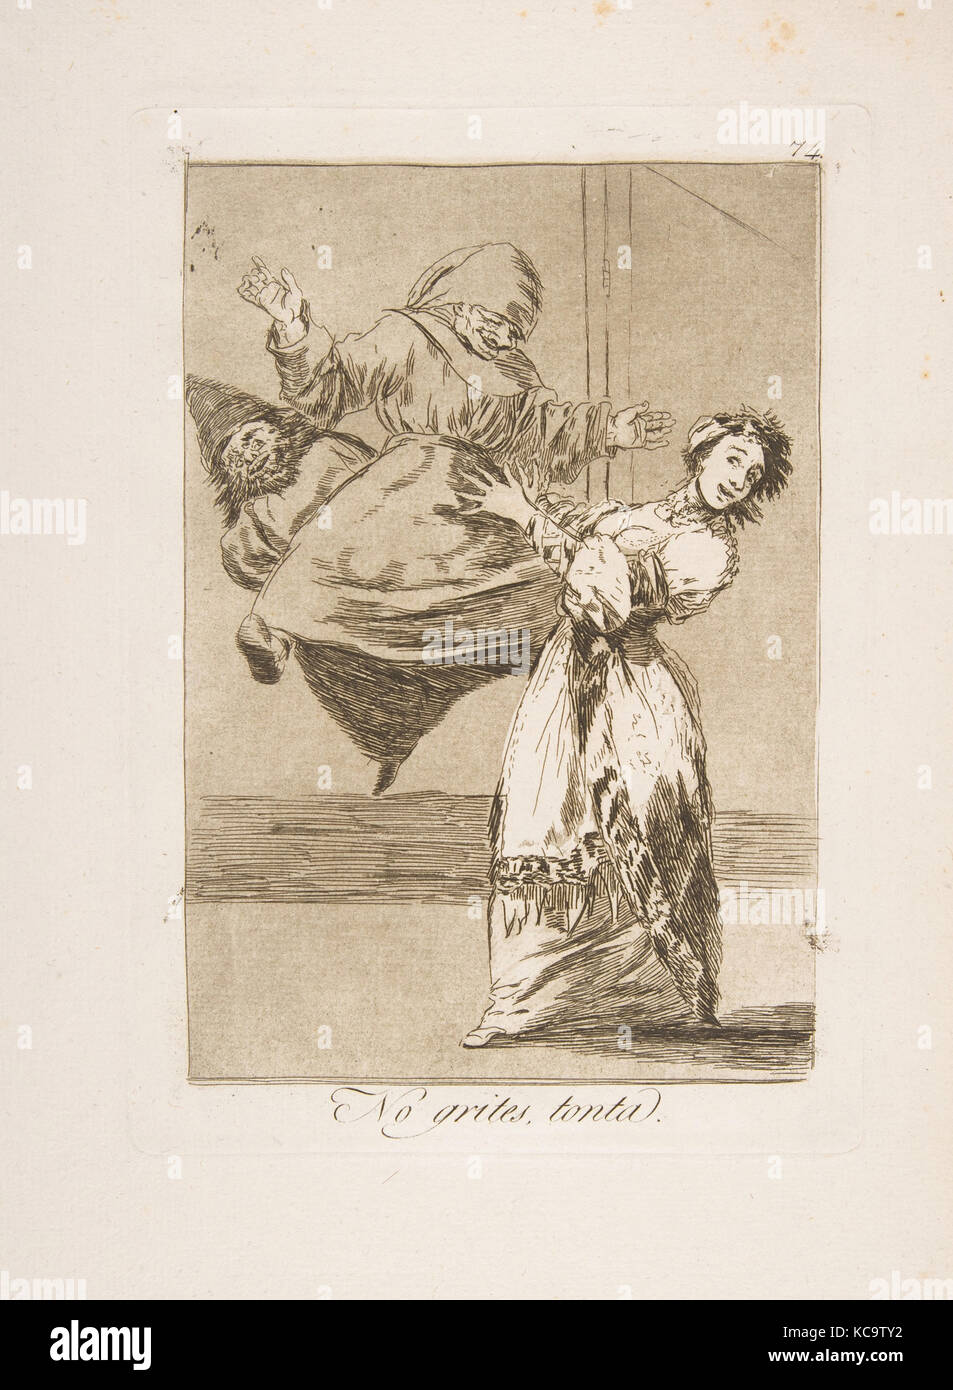 Plate 74 from 'Los Caprichos': Don't scream, stupid (No grites, tonta), Goya, 1799 Stock Photo